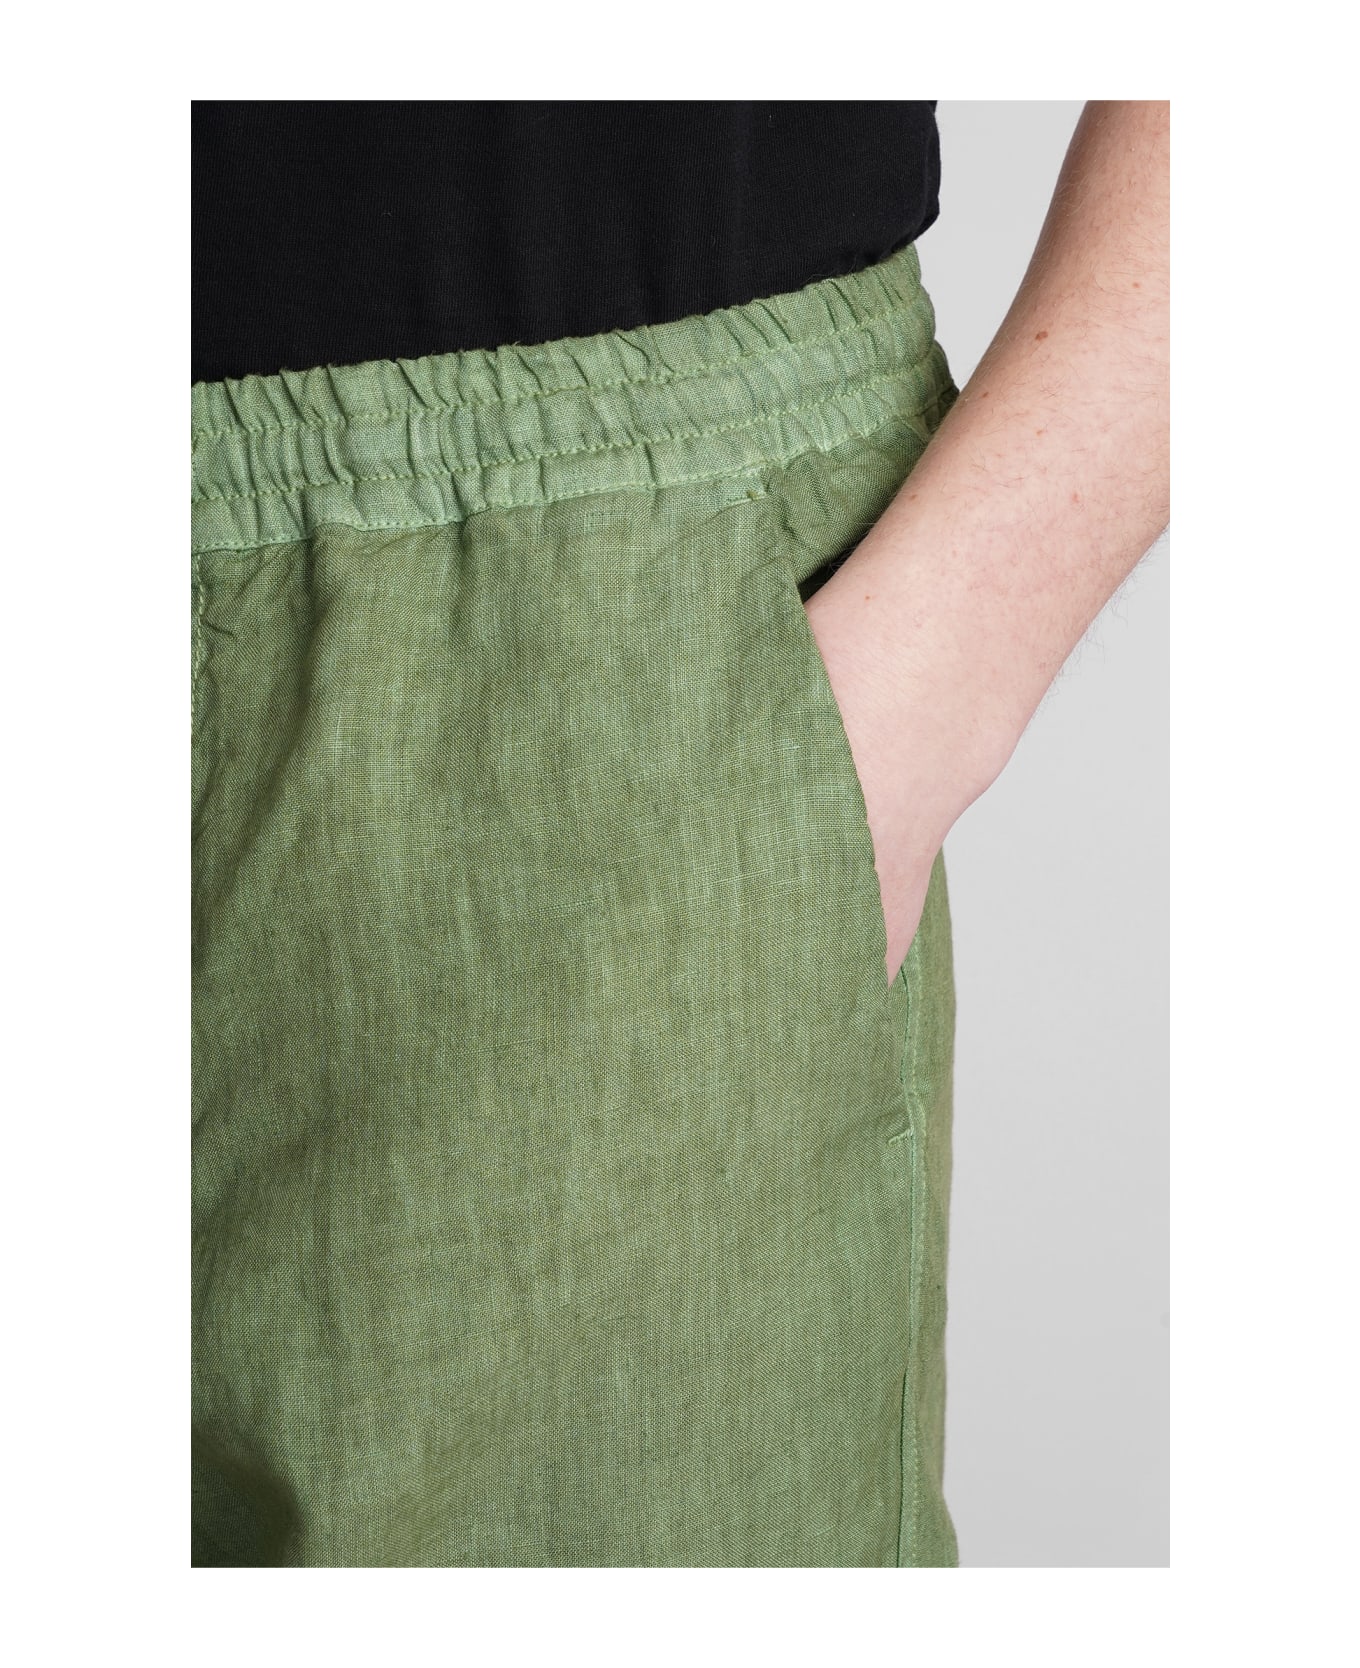 120% Lino Shorts In Green Linen - green ショートパンツ